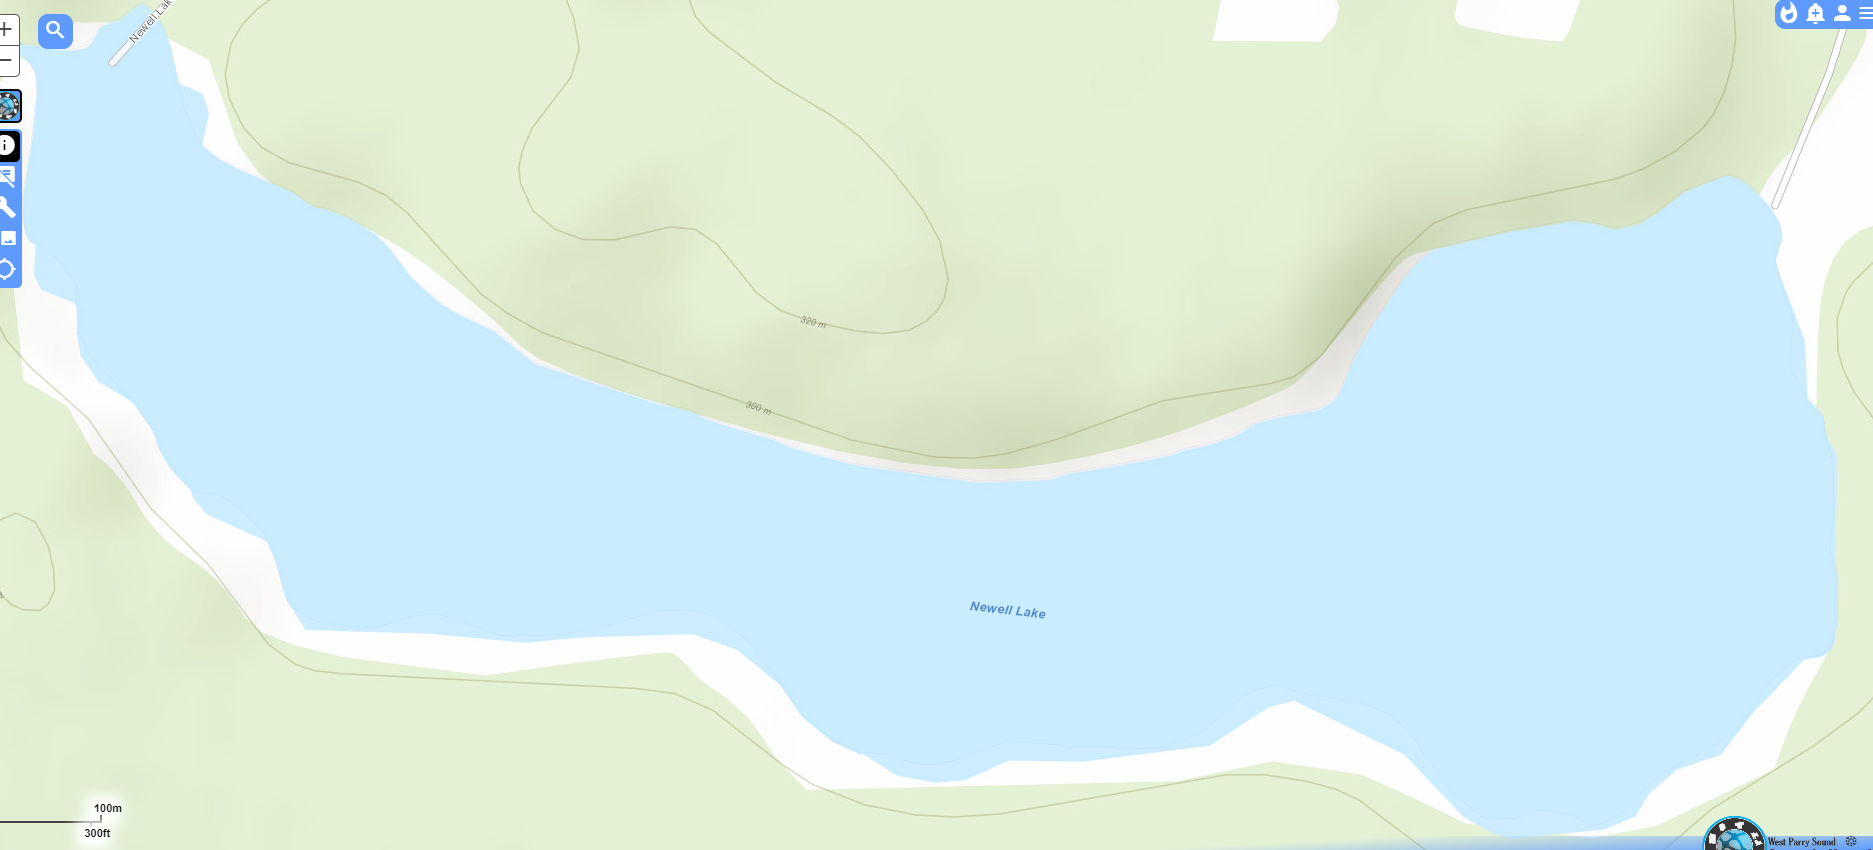 Newell Lake Cadastral Map - Newell Lake - Muskoka